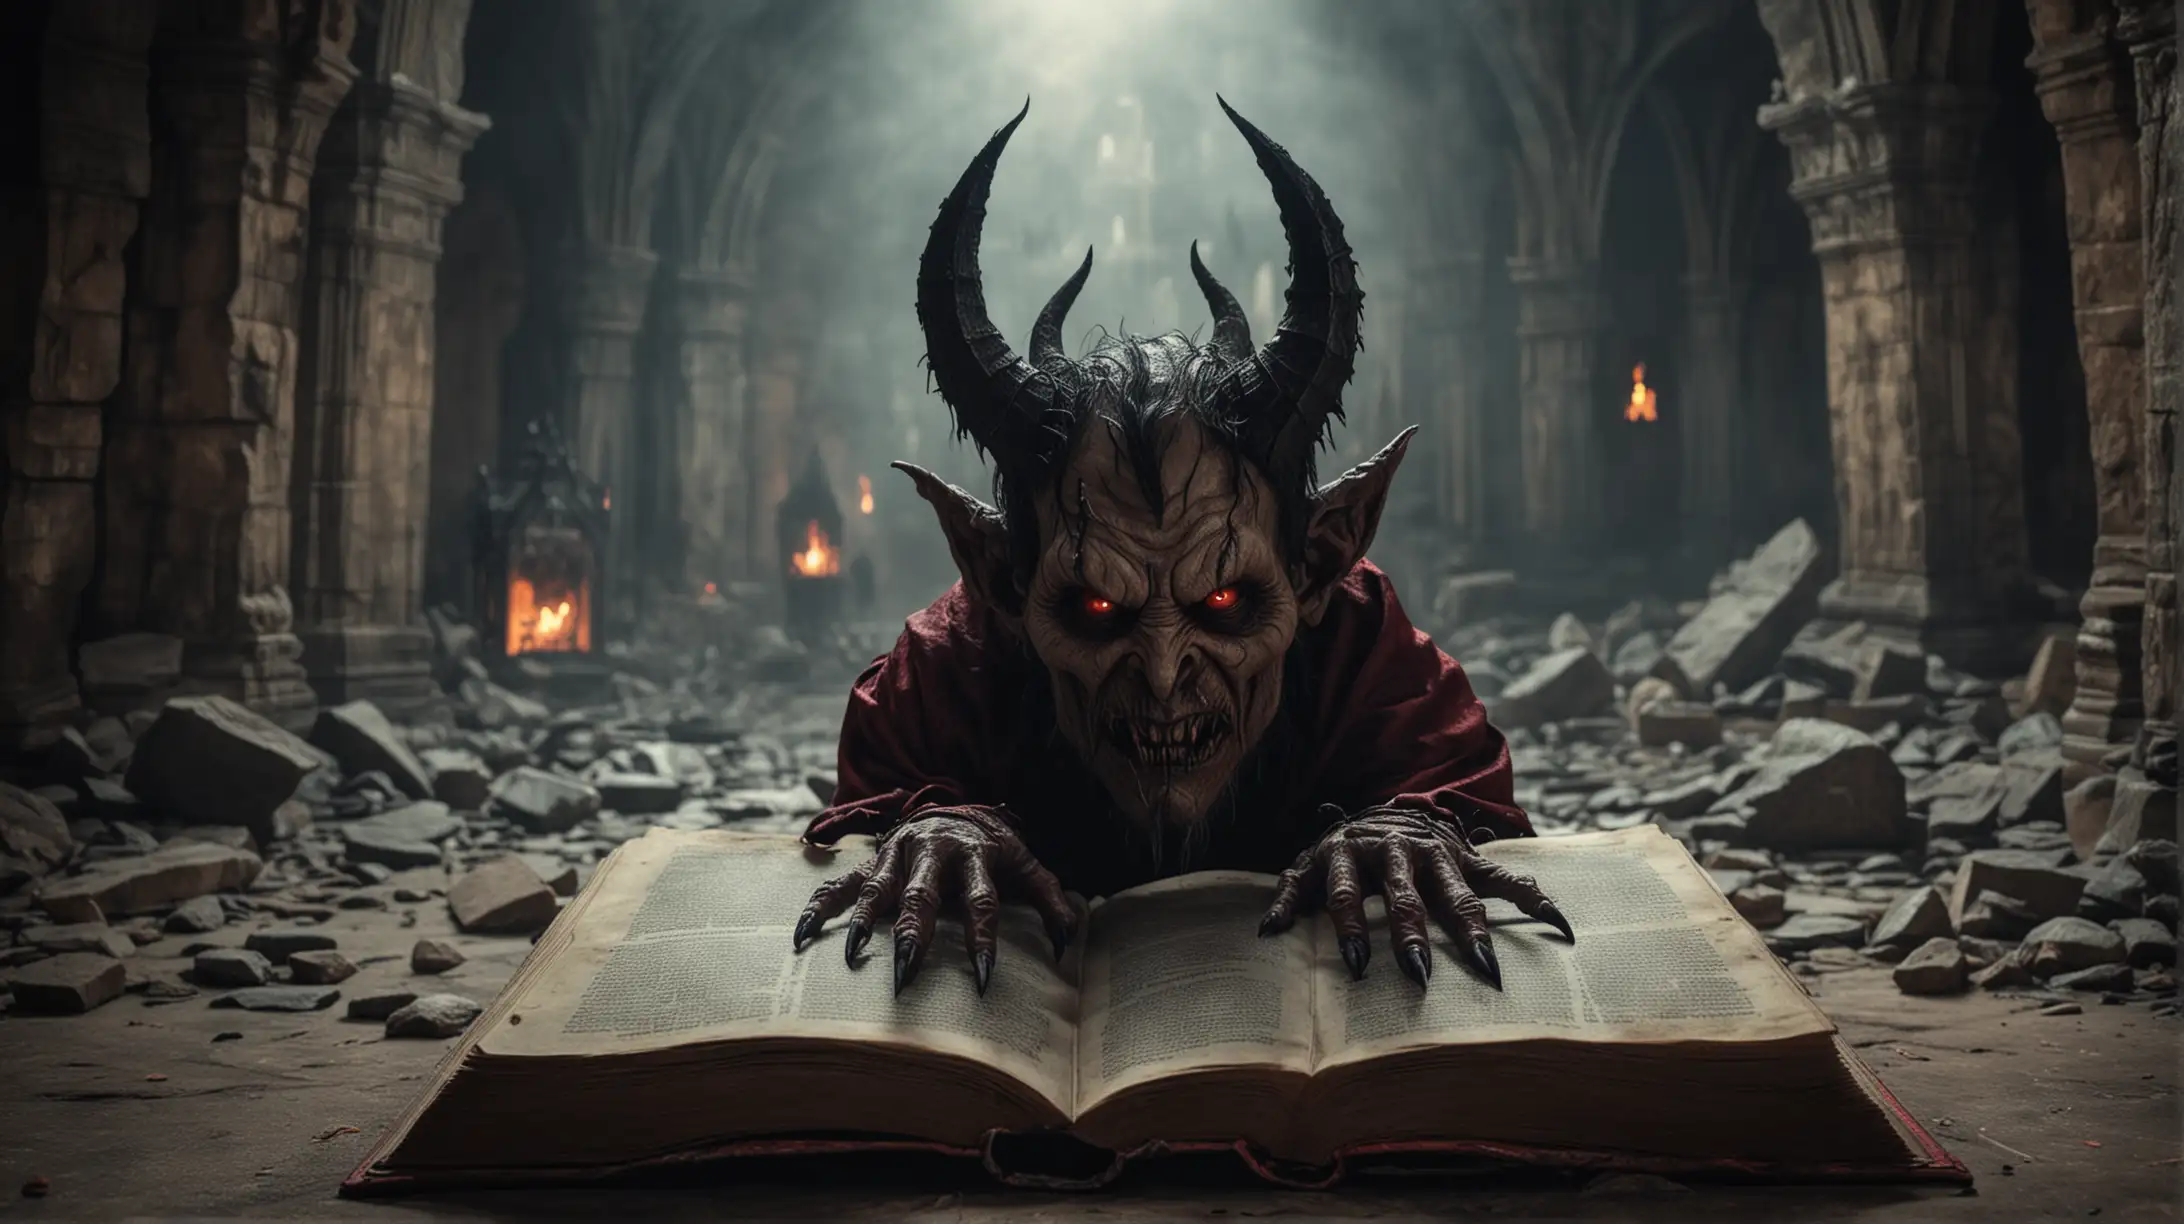 Scary Devil Cover Book in Devils Monastery Closeup 4K Photo